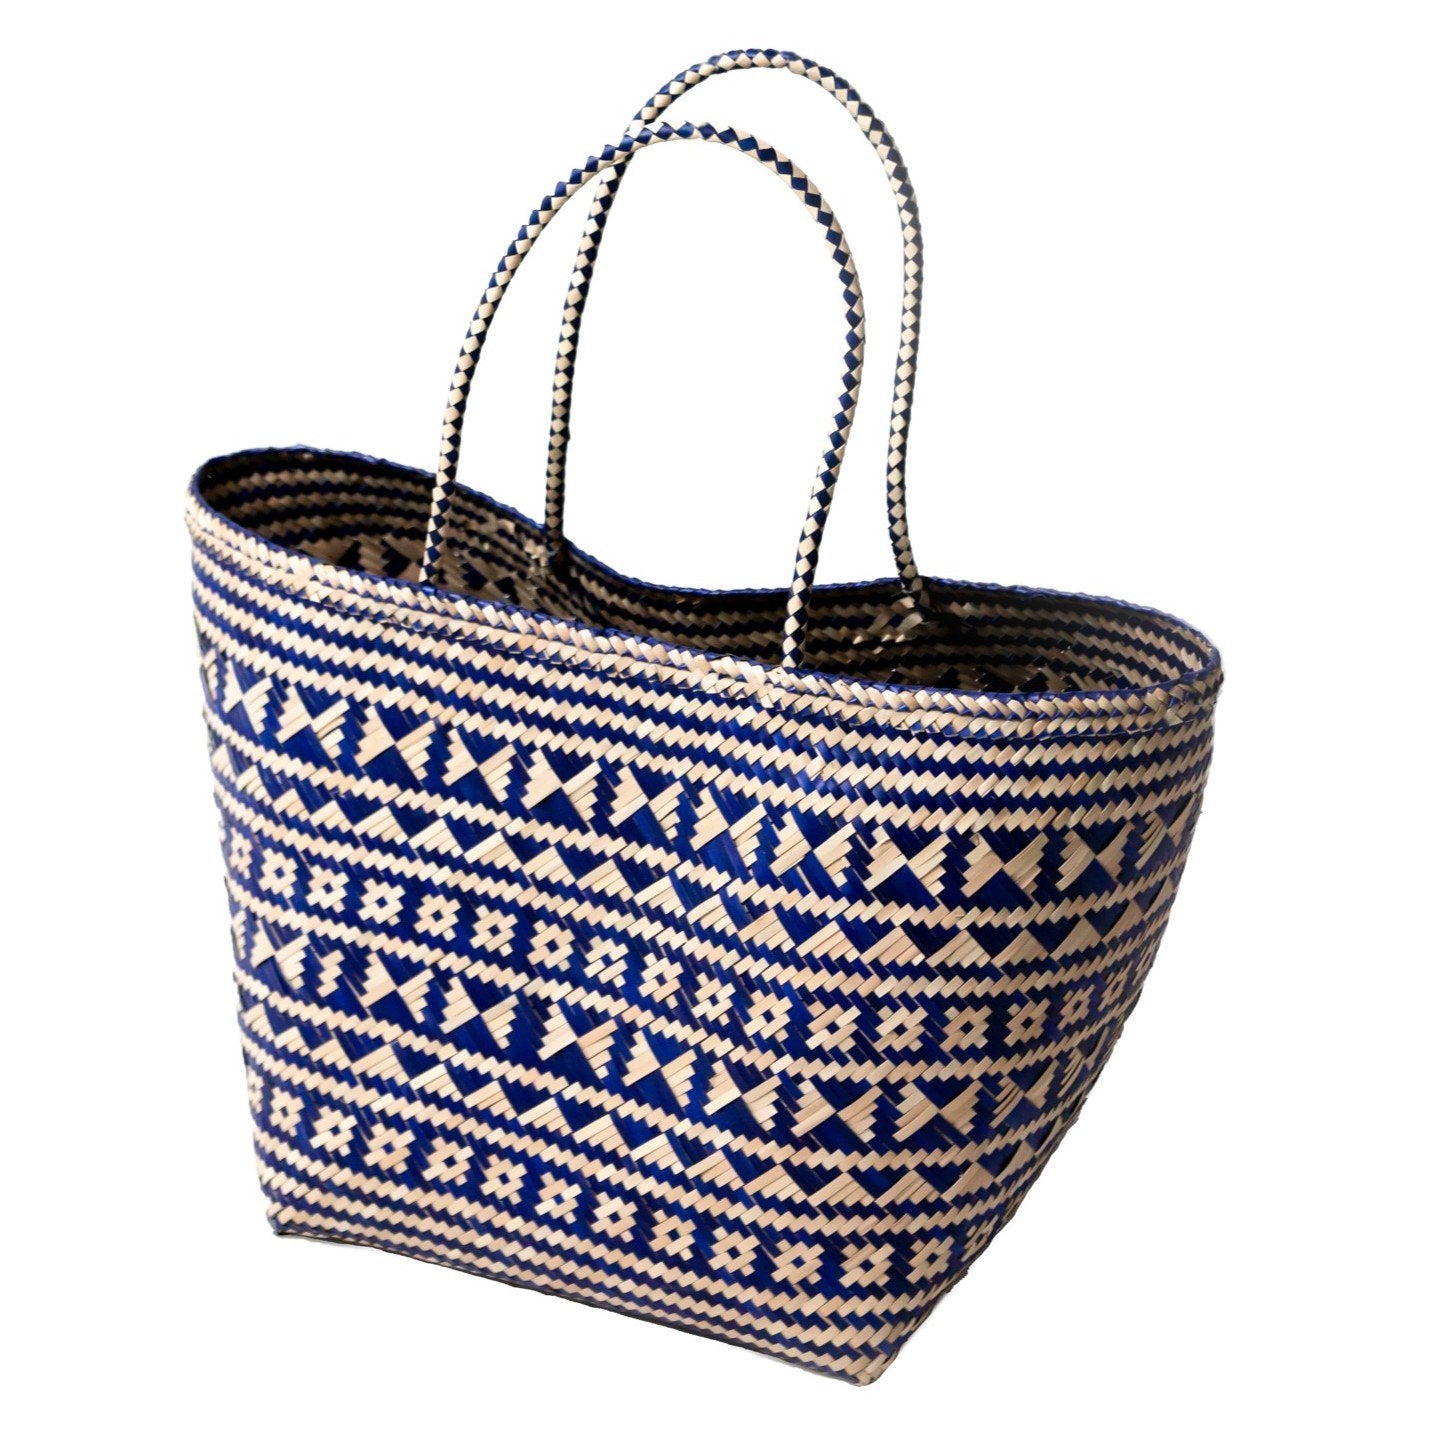 Blue Shopping Bag | Beach Bag | Tote Bag KIDUL made of Rattan